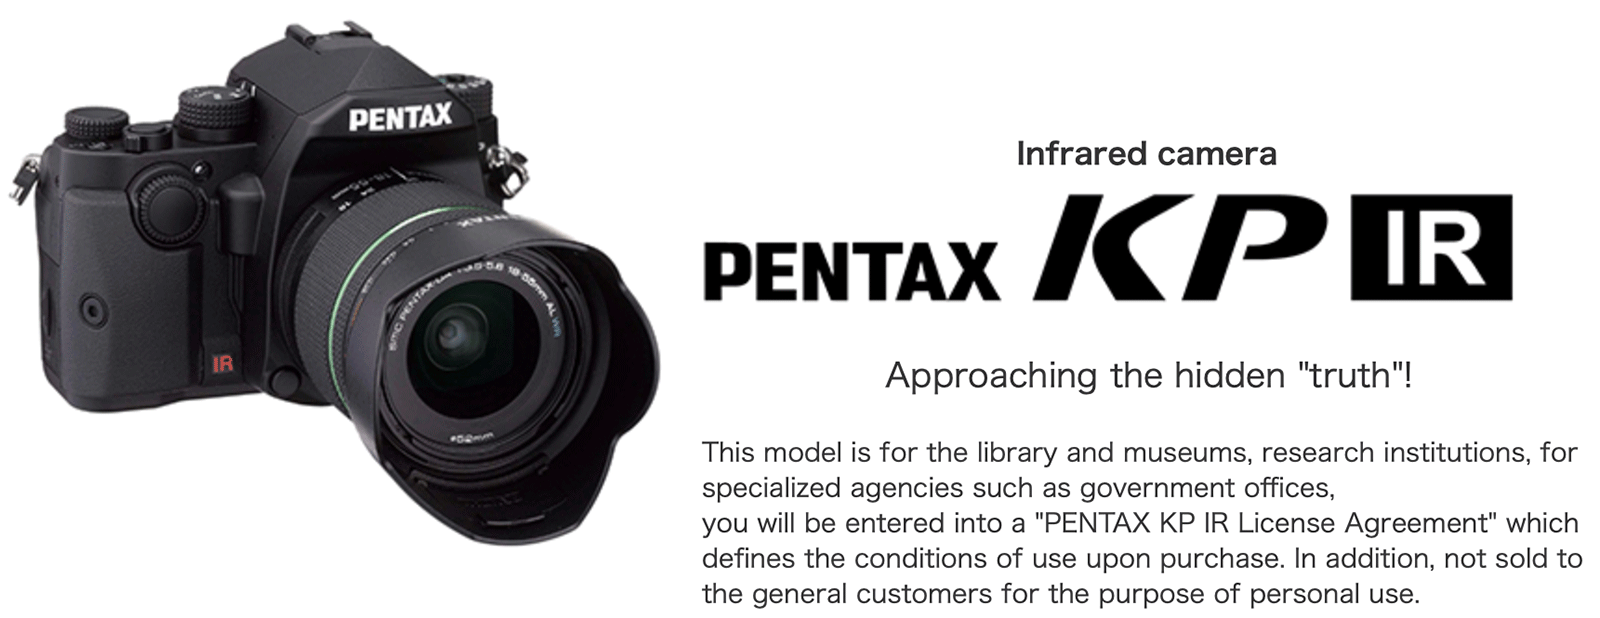 Pentax-KP-IR-infrared-camera-3.png